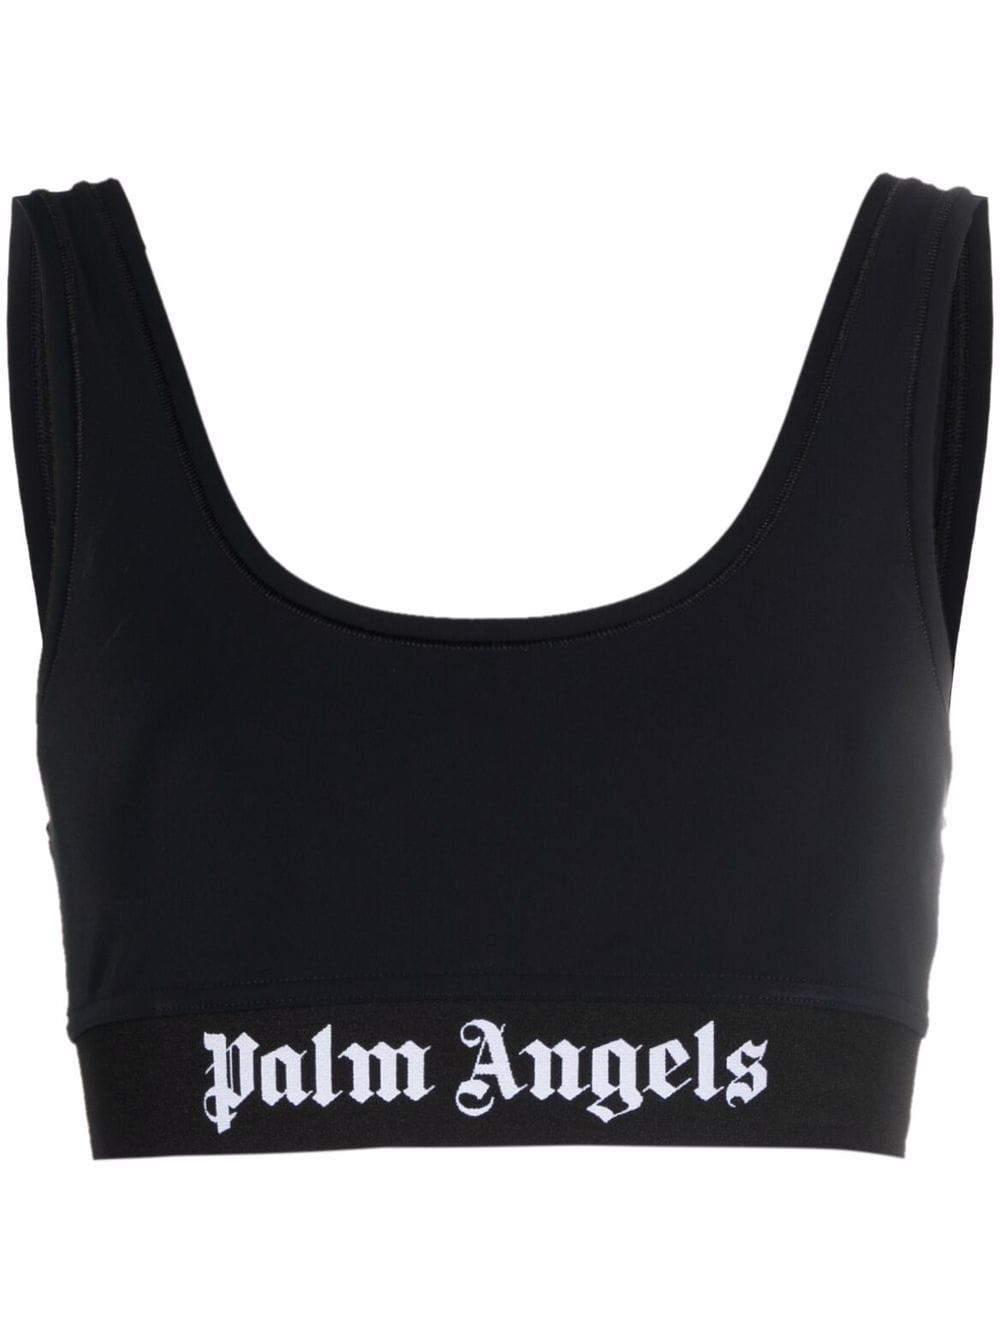 PALM ANGELS WOMEN Logo Sports Bra Black - MAISONDEFASHION.COM